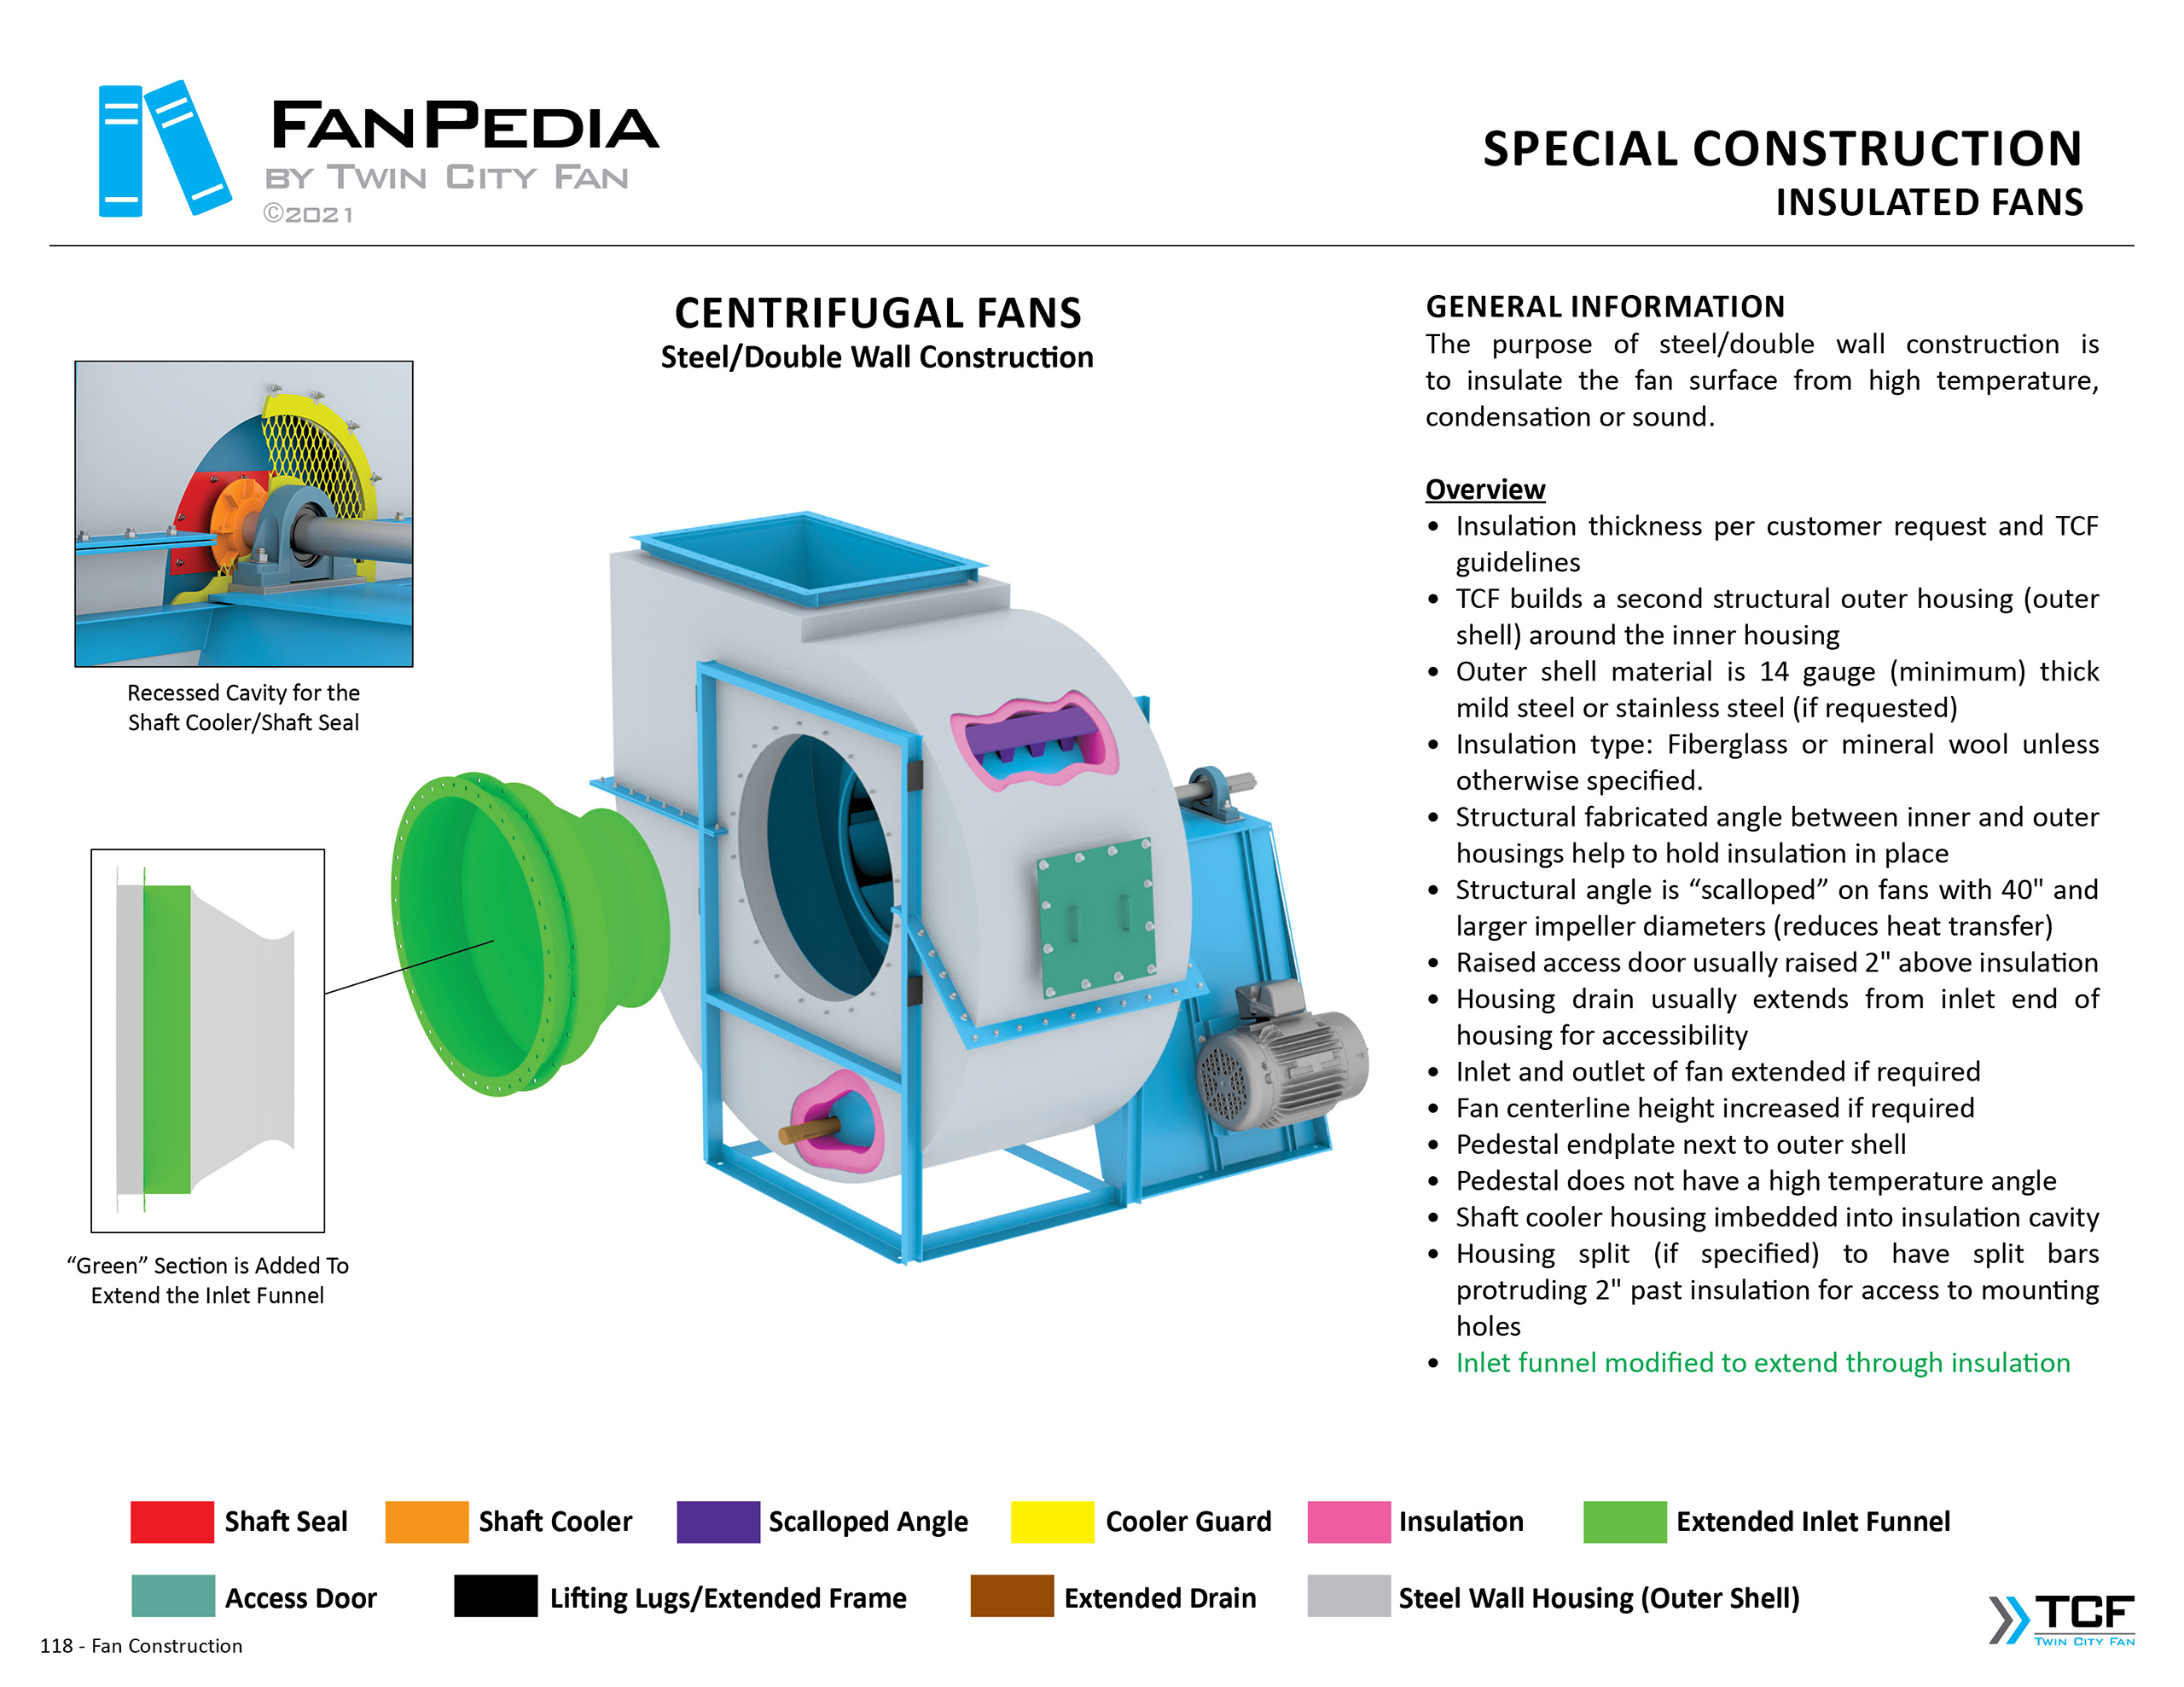 Fan Construction - Insulated Fans 2